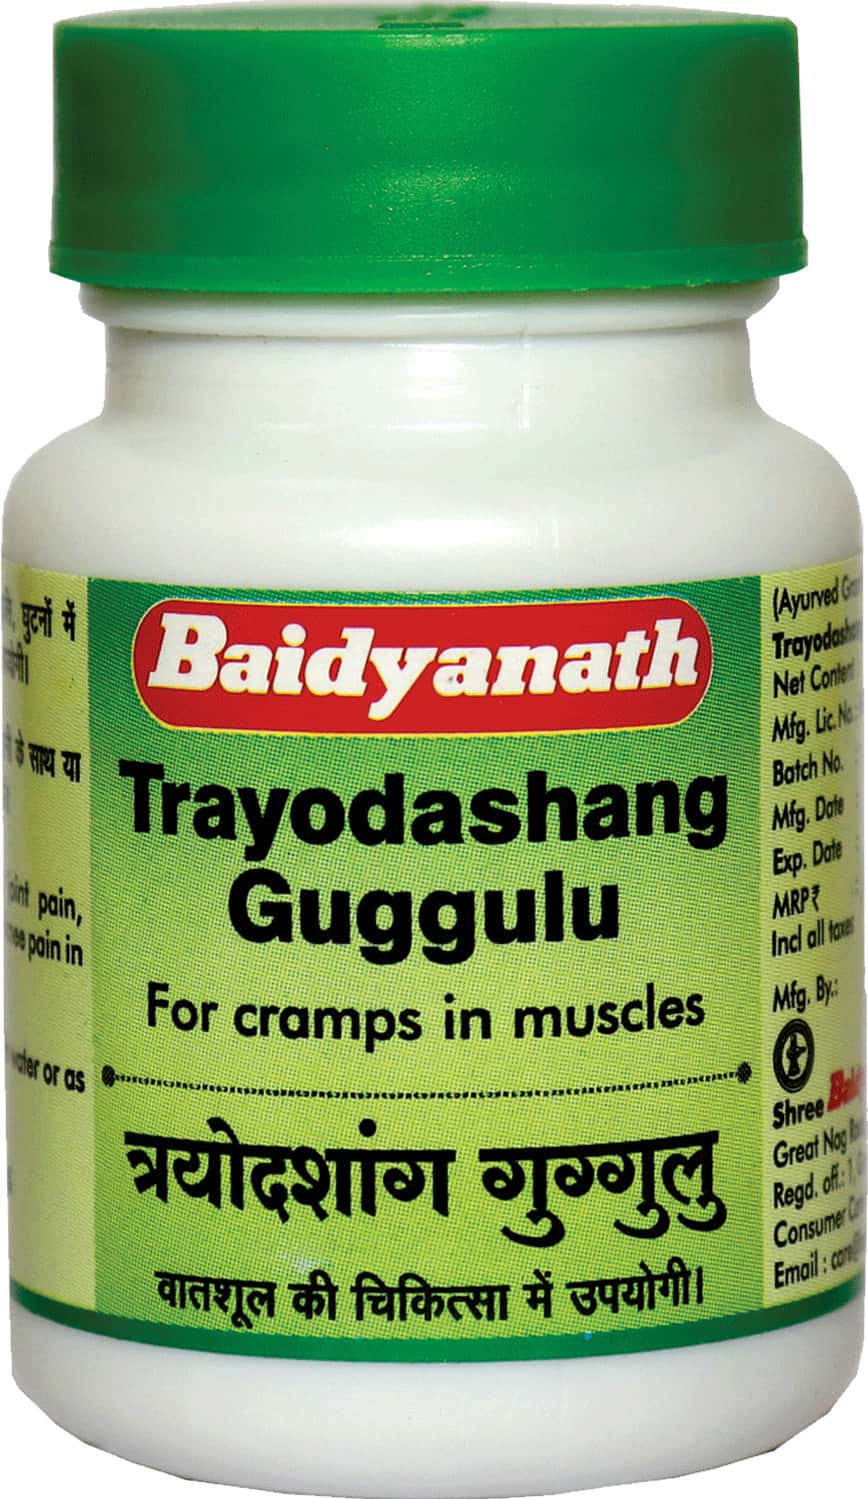 Baidyanath Nagpur Trayodashang Guggulu 80 Tablets (Pack Of 2)